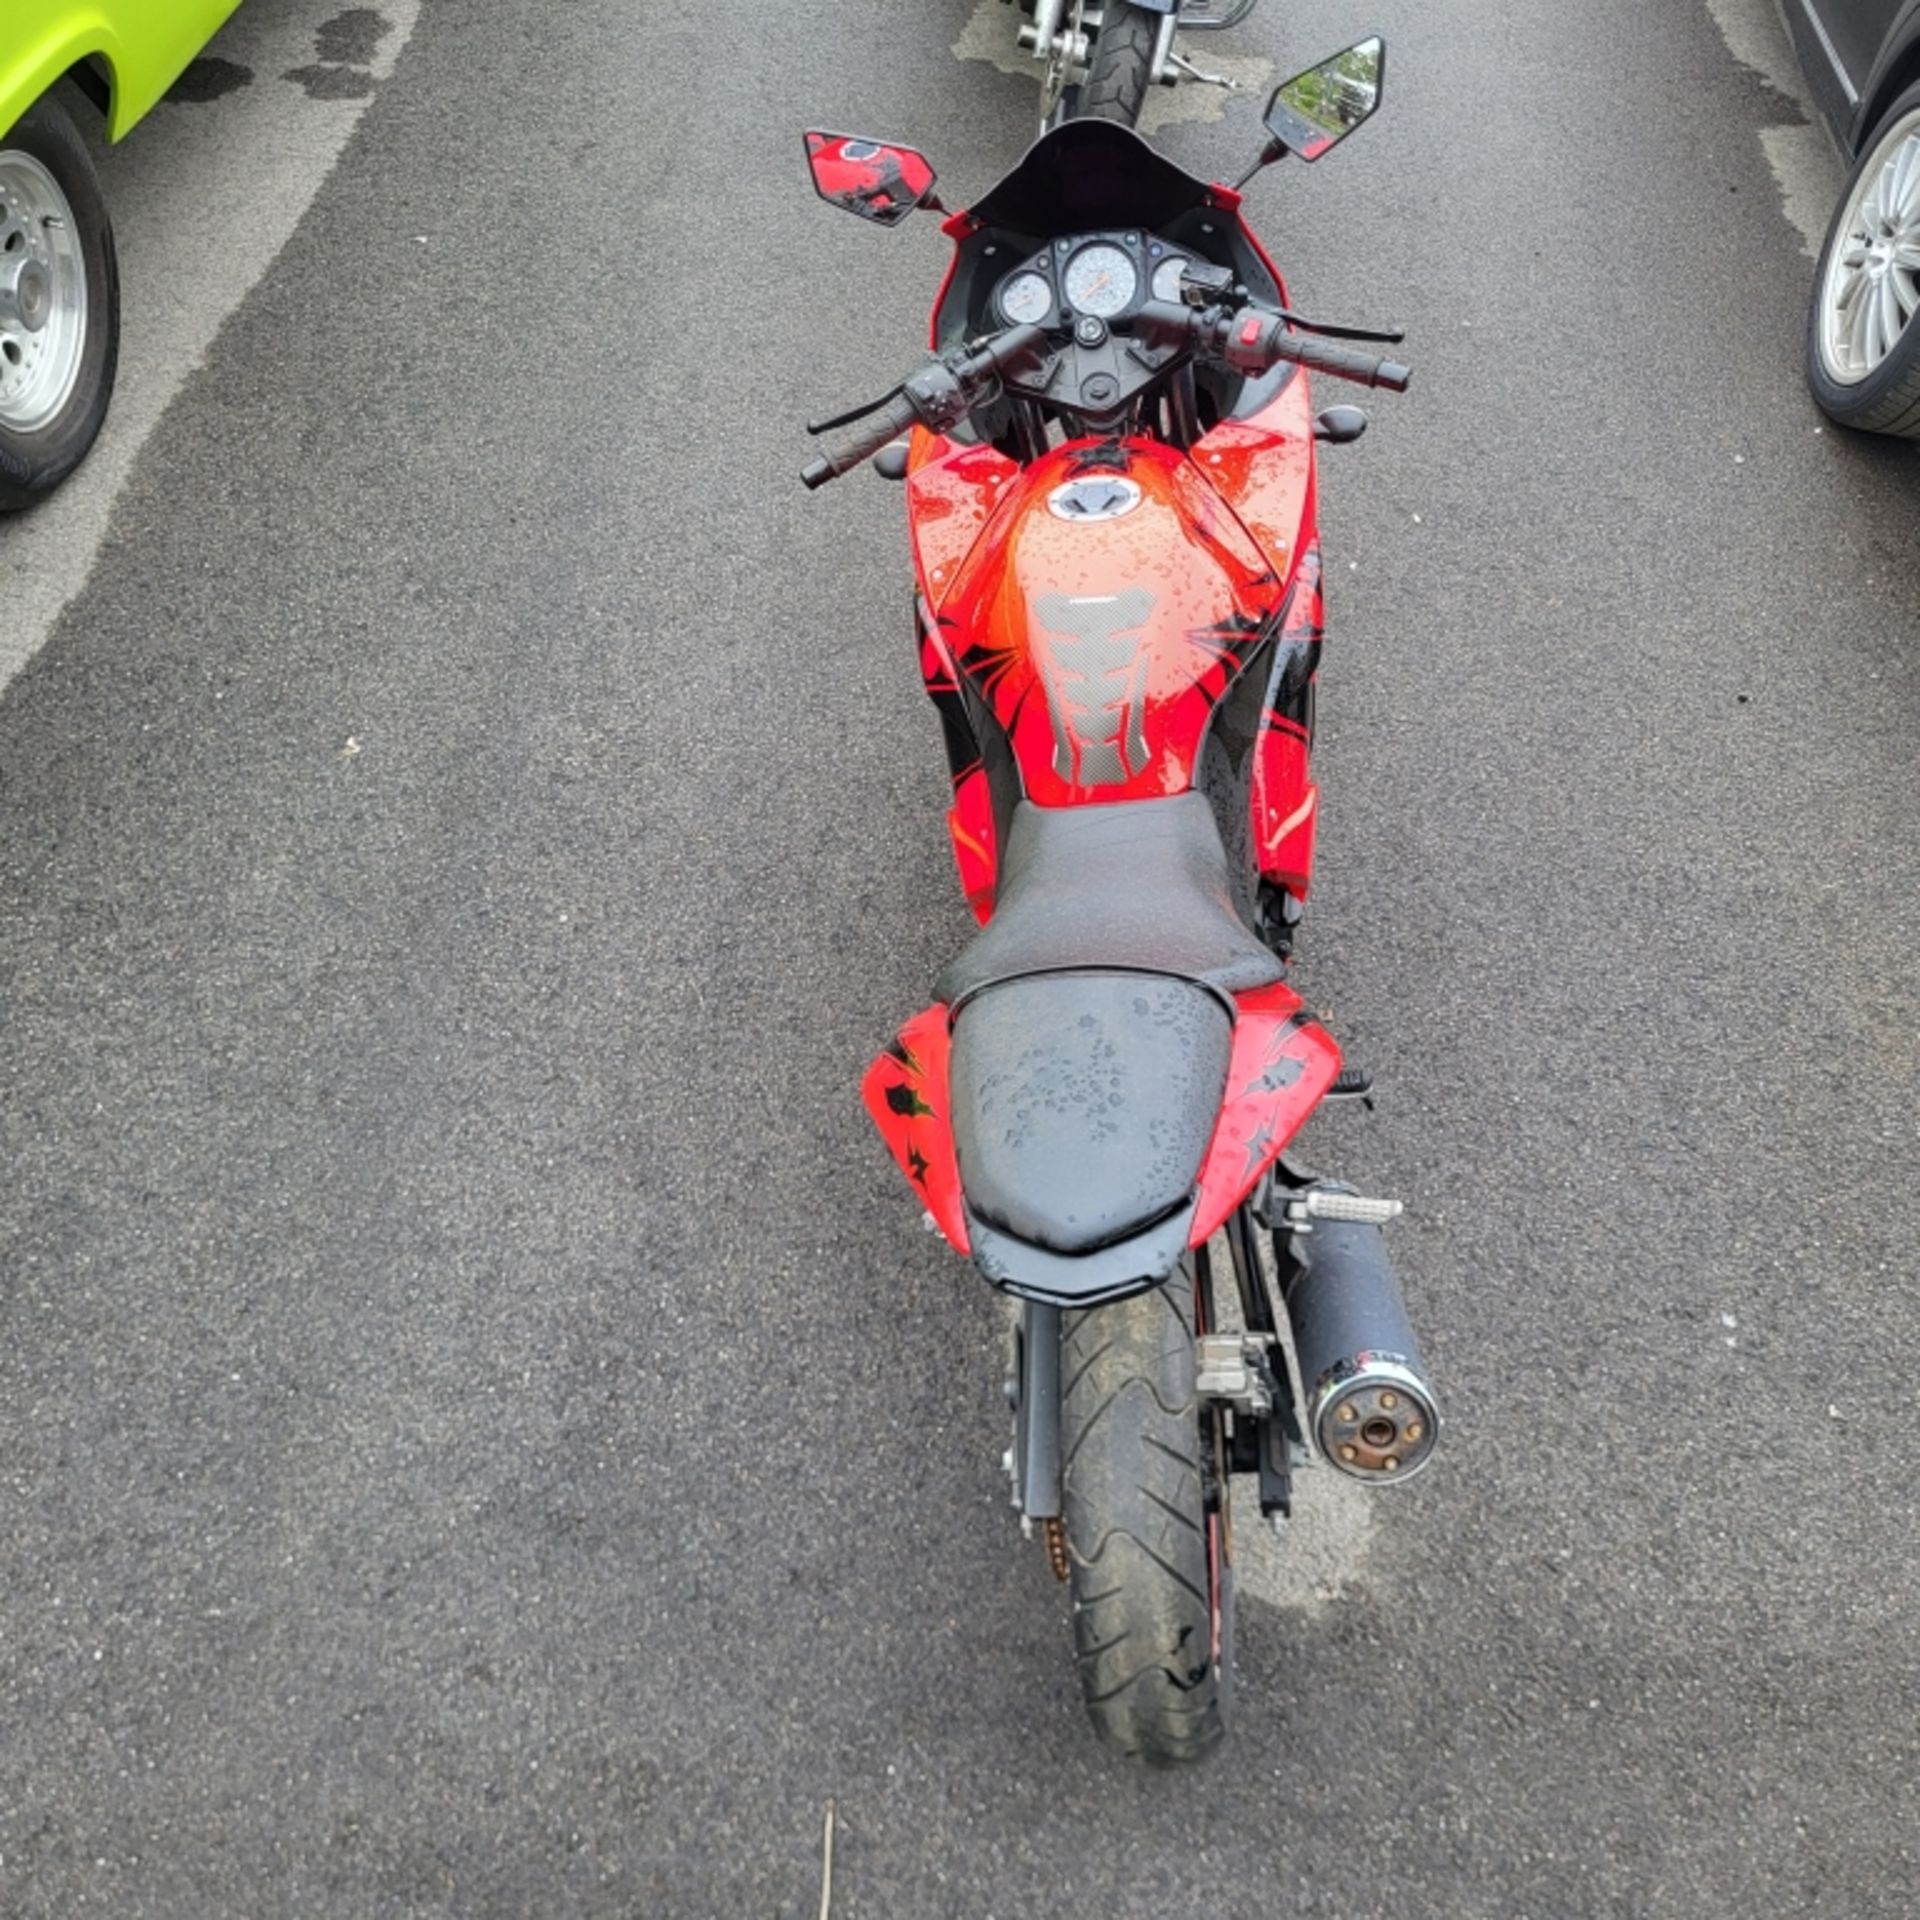 2010 Kawasaki Ninja 250r Motorcycle - Image 8 of 17